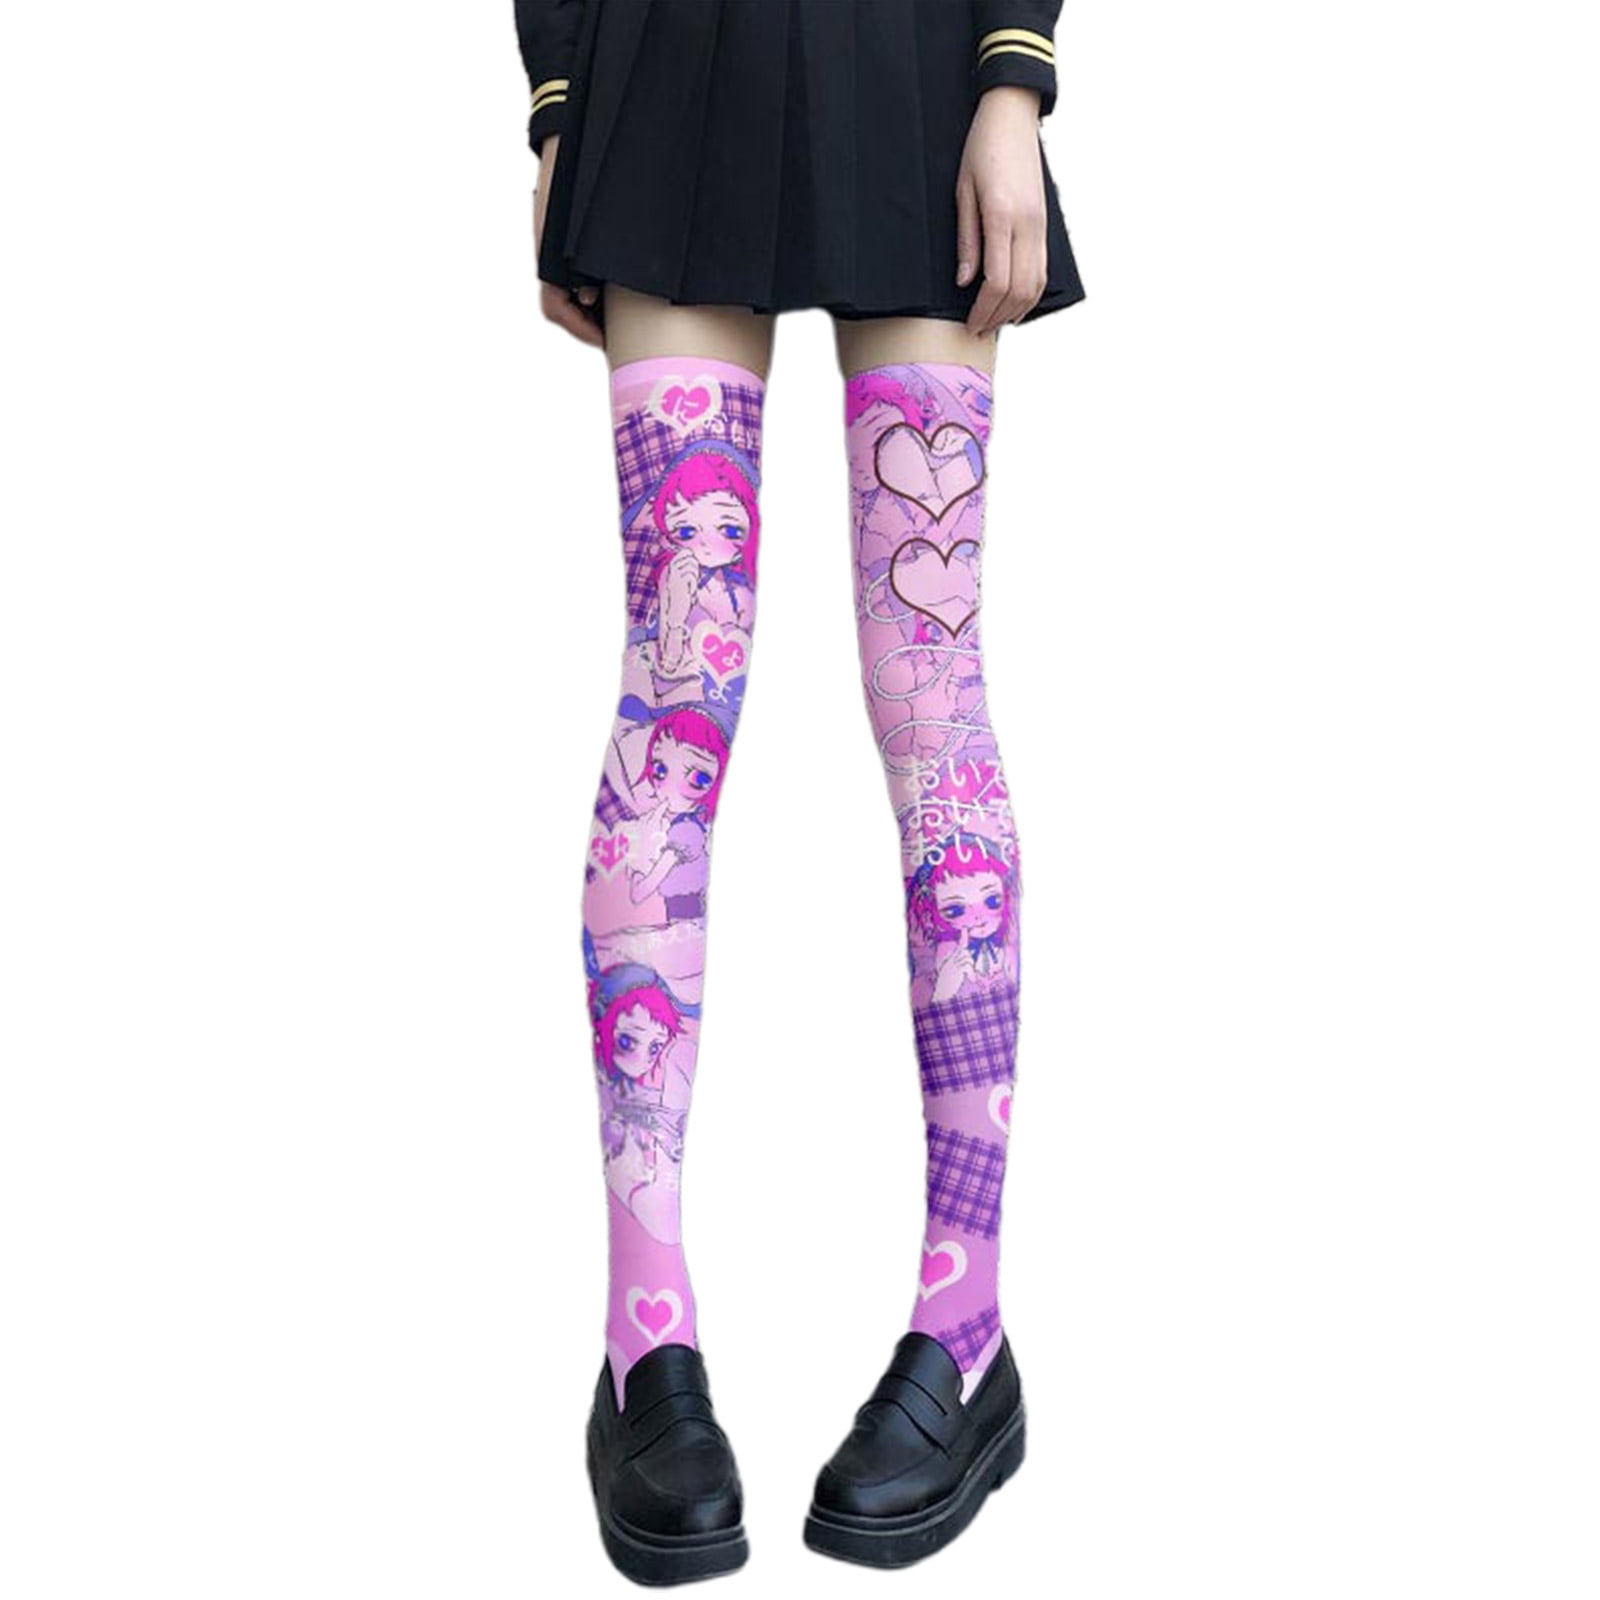 Kawaii Anime Thigh High Socks, Cute Cartoon Print Lolita Over The Knee  Stocks, Women's Stockings & Hosiery